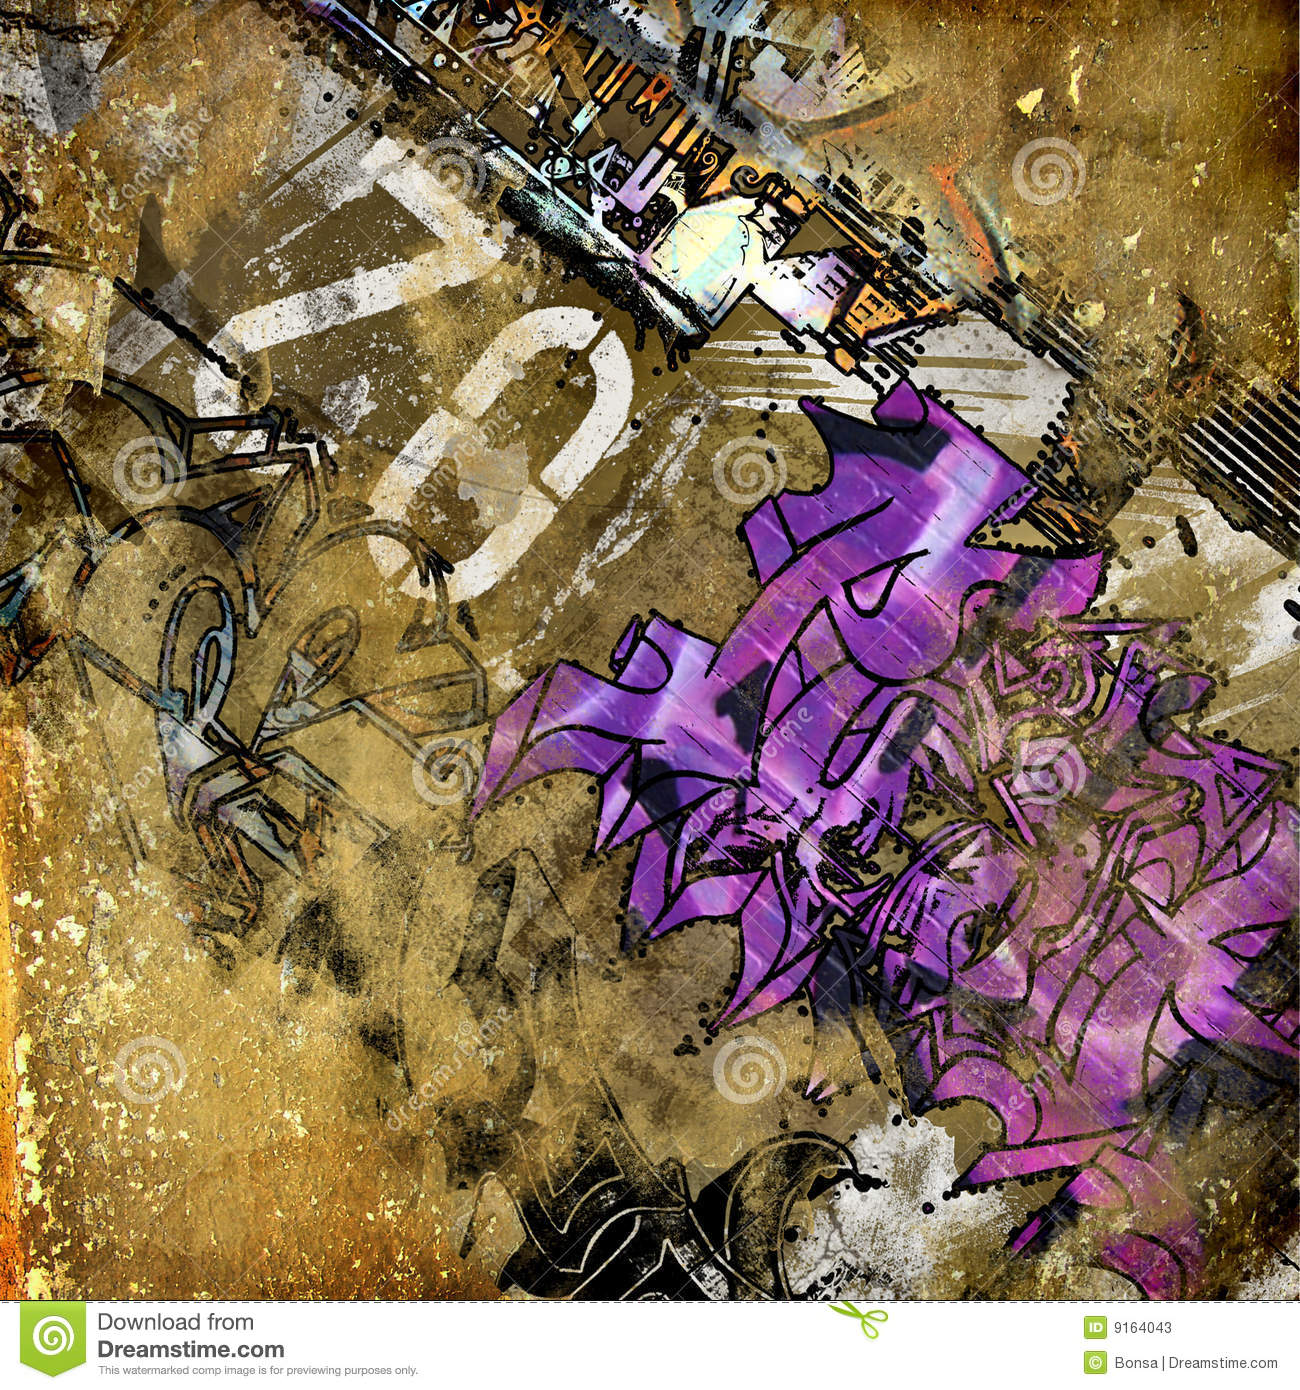 Nice Images Collection: Grunge Art Desktop Wallpapers